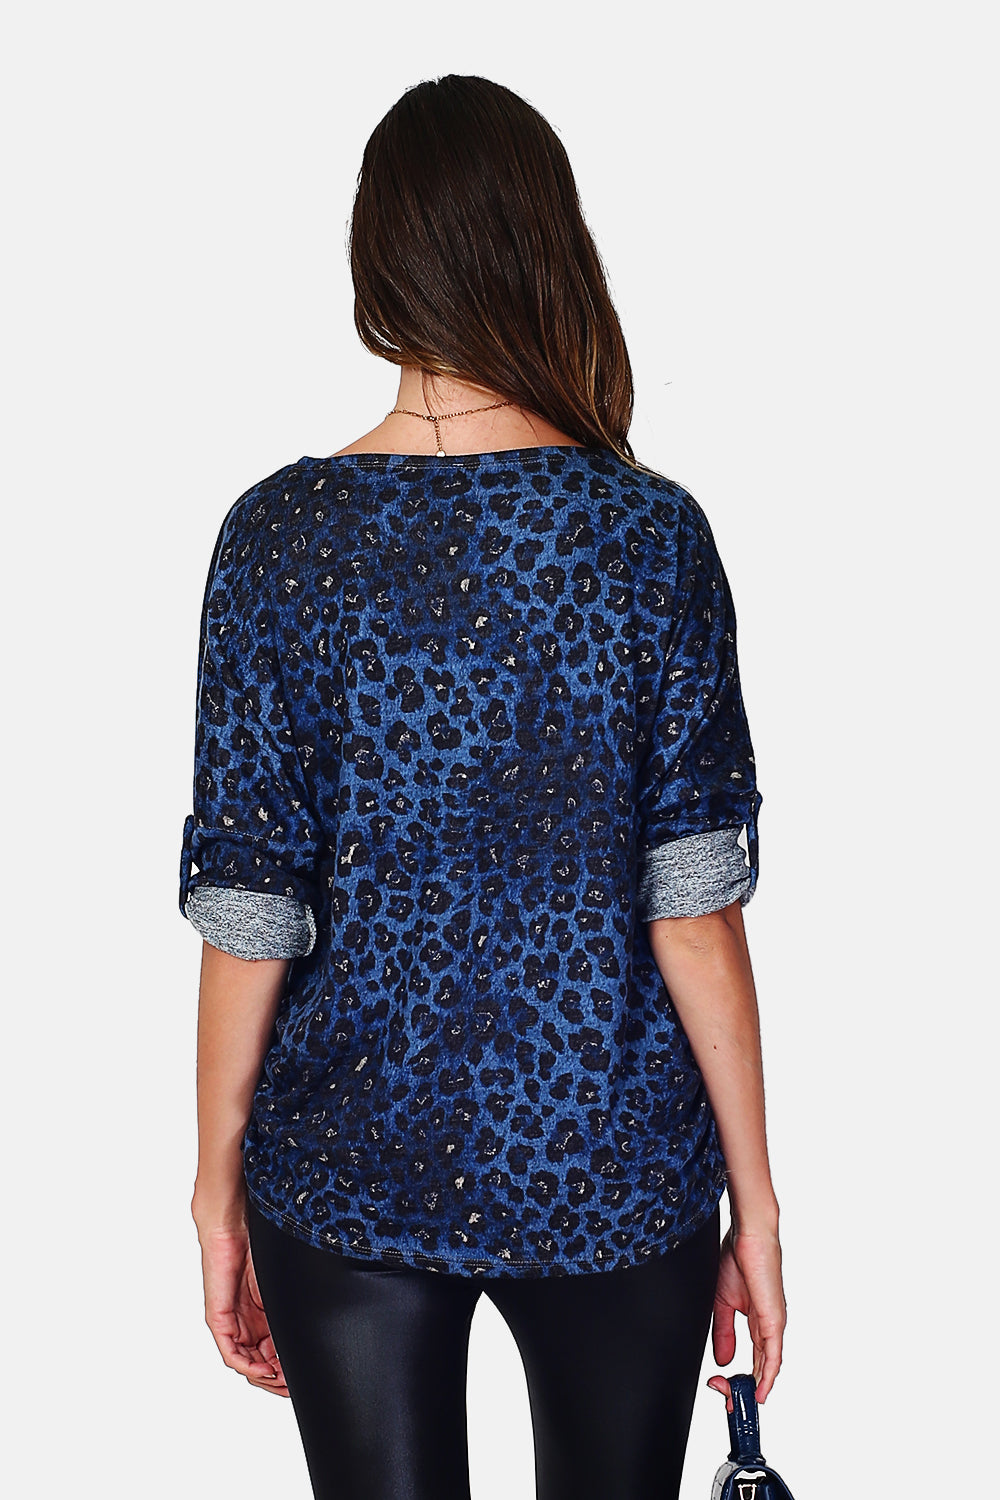 Leopard Print Sleeve Crewneck Sweater